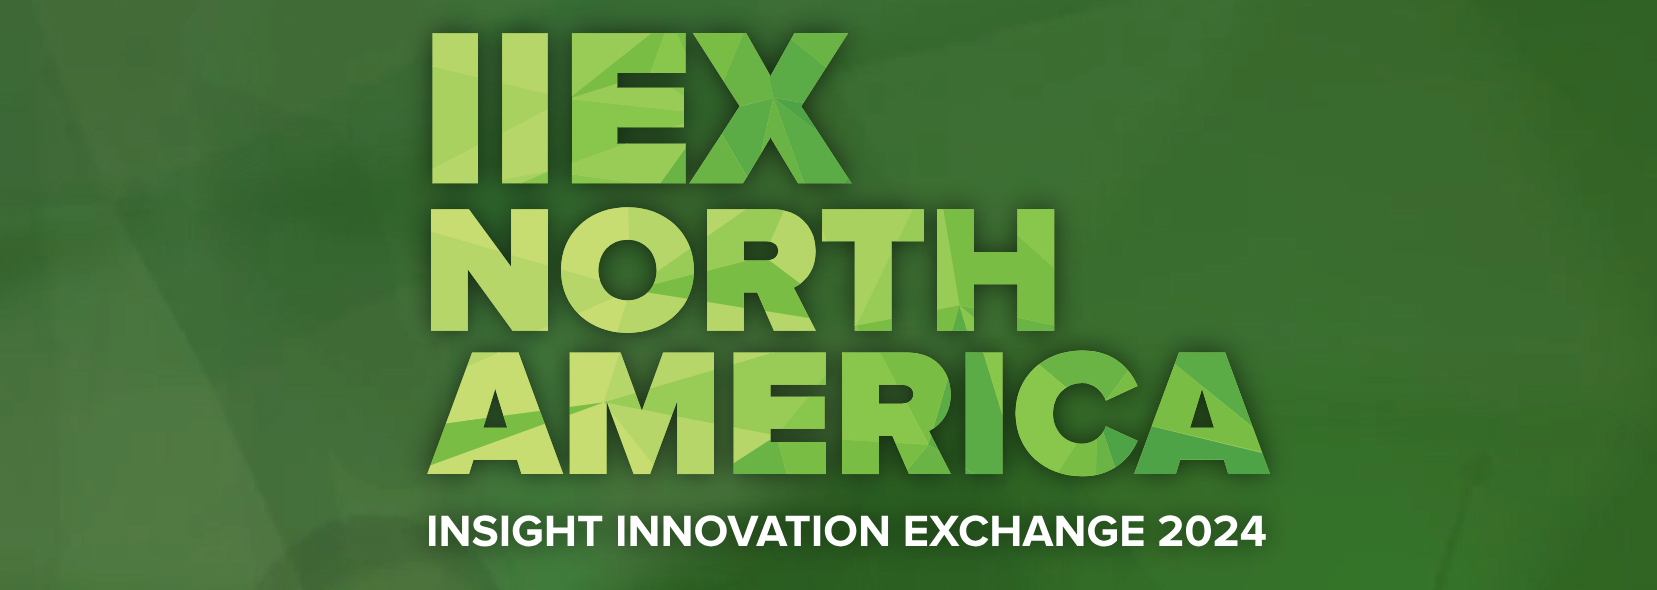 IIeX North America 2024